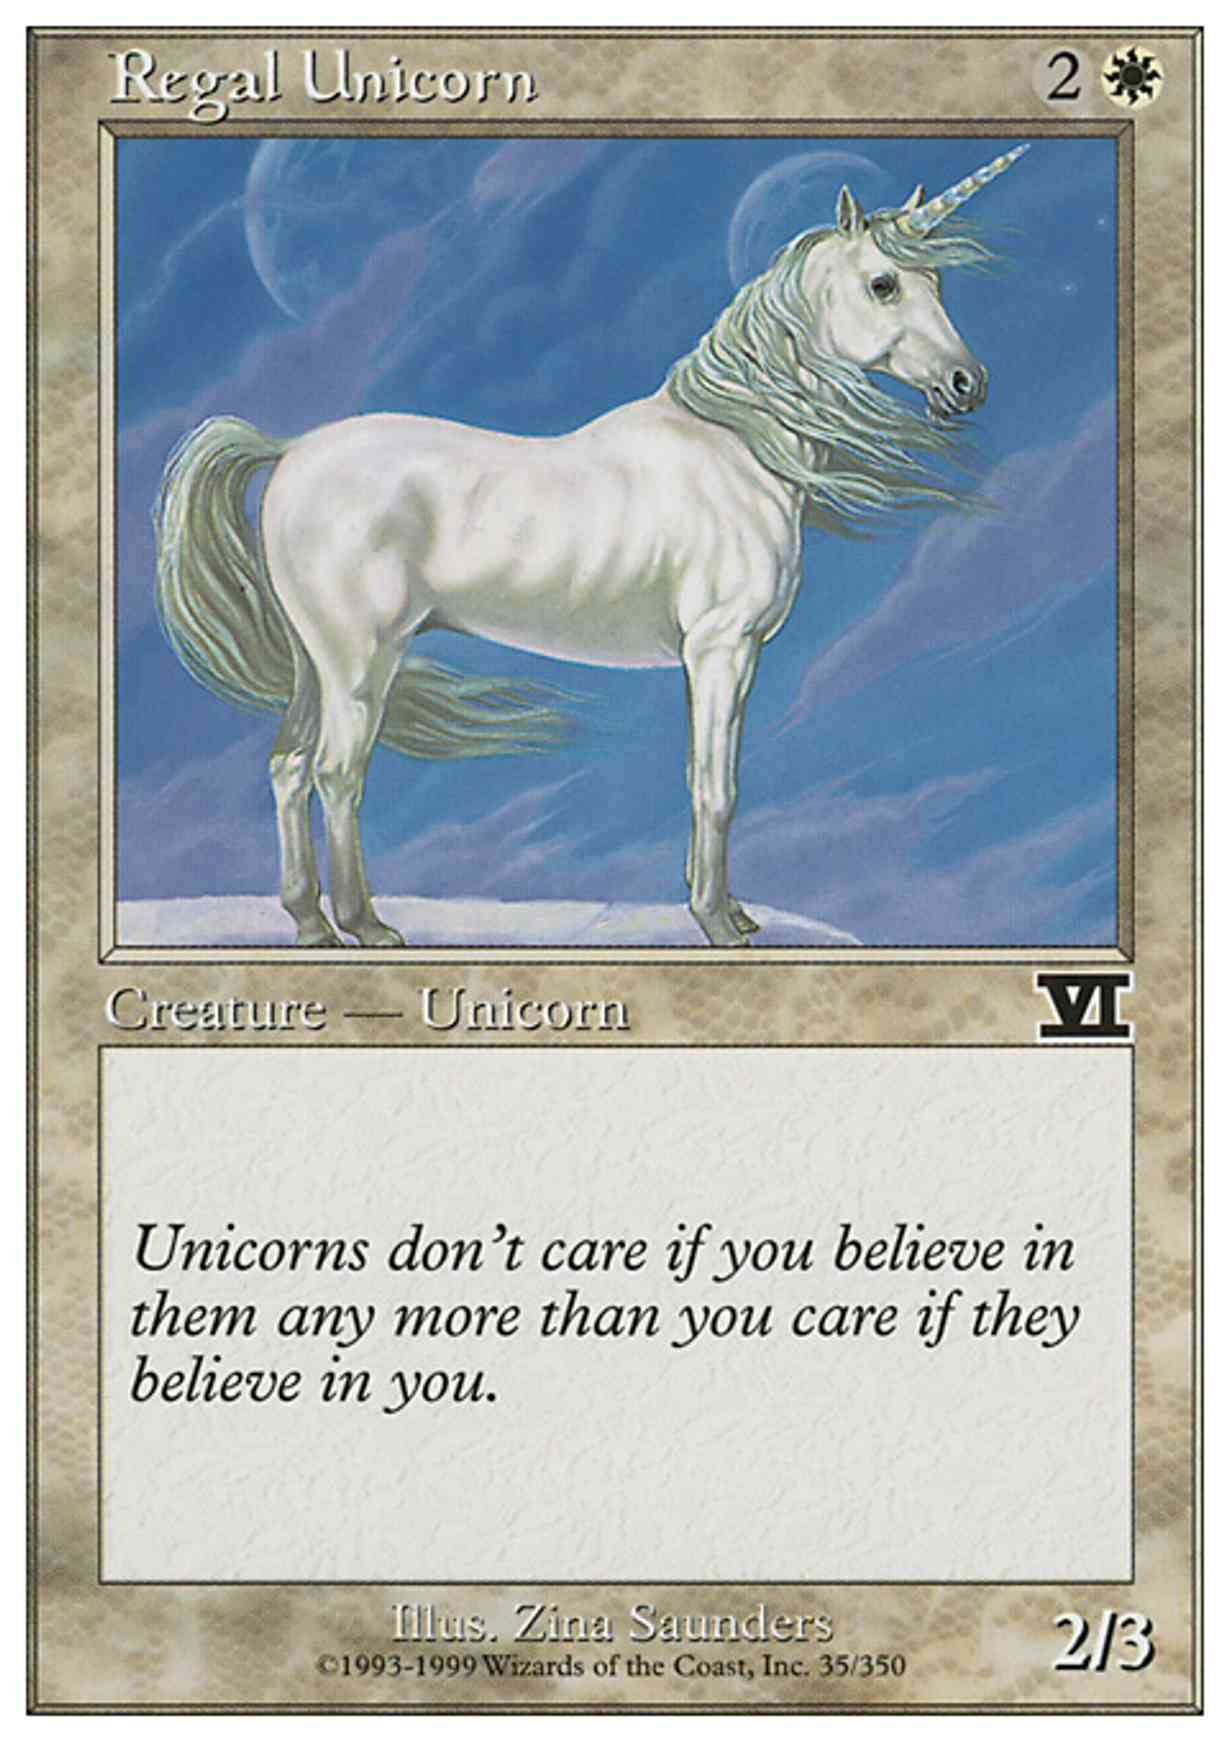 Regal Unicorn magic card front